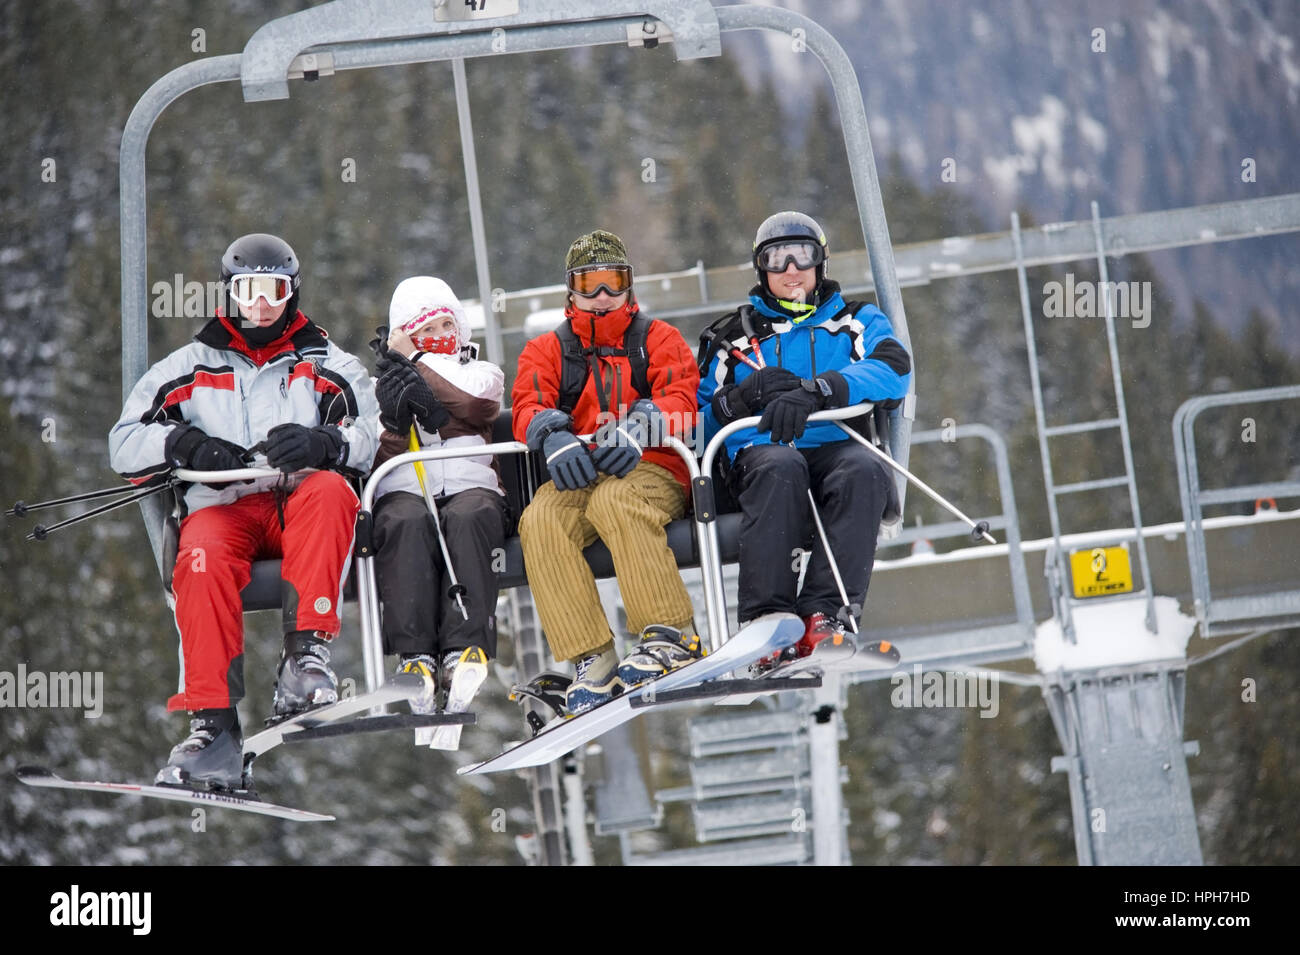 Wintersportler am Sessellift - winter sportspeople on chair lift Stock Photo